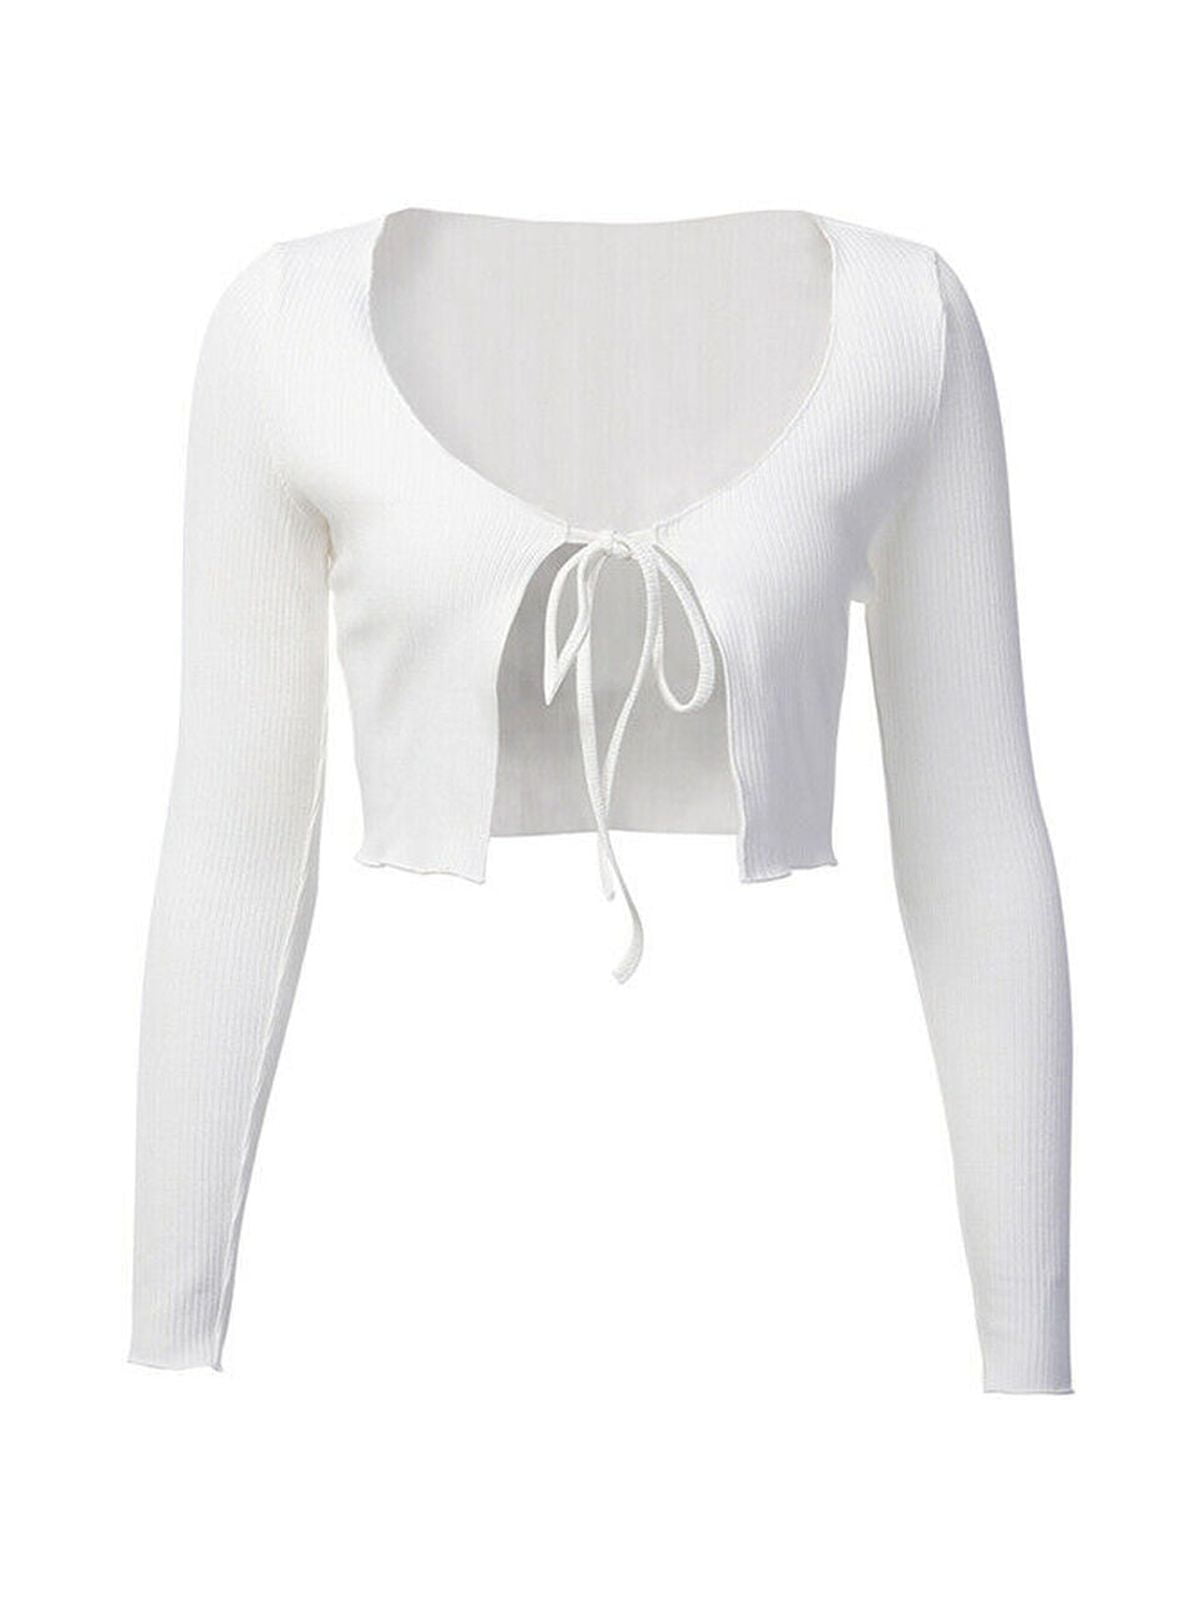 Womens Open Chest Pretty blouses female fashion new Long Sleeve short Tops  shirt